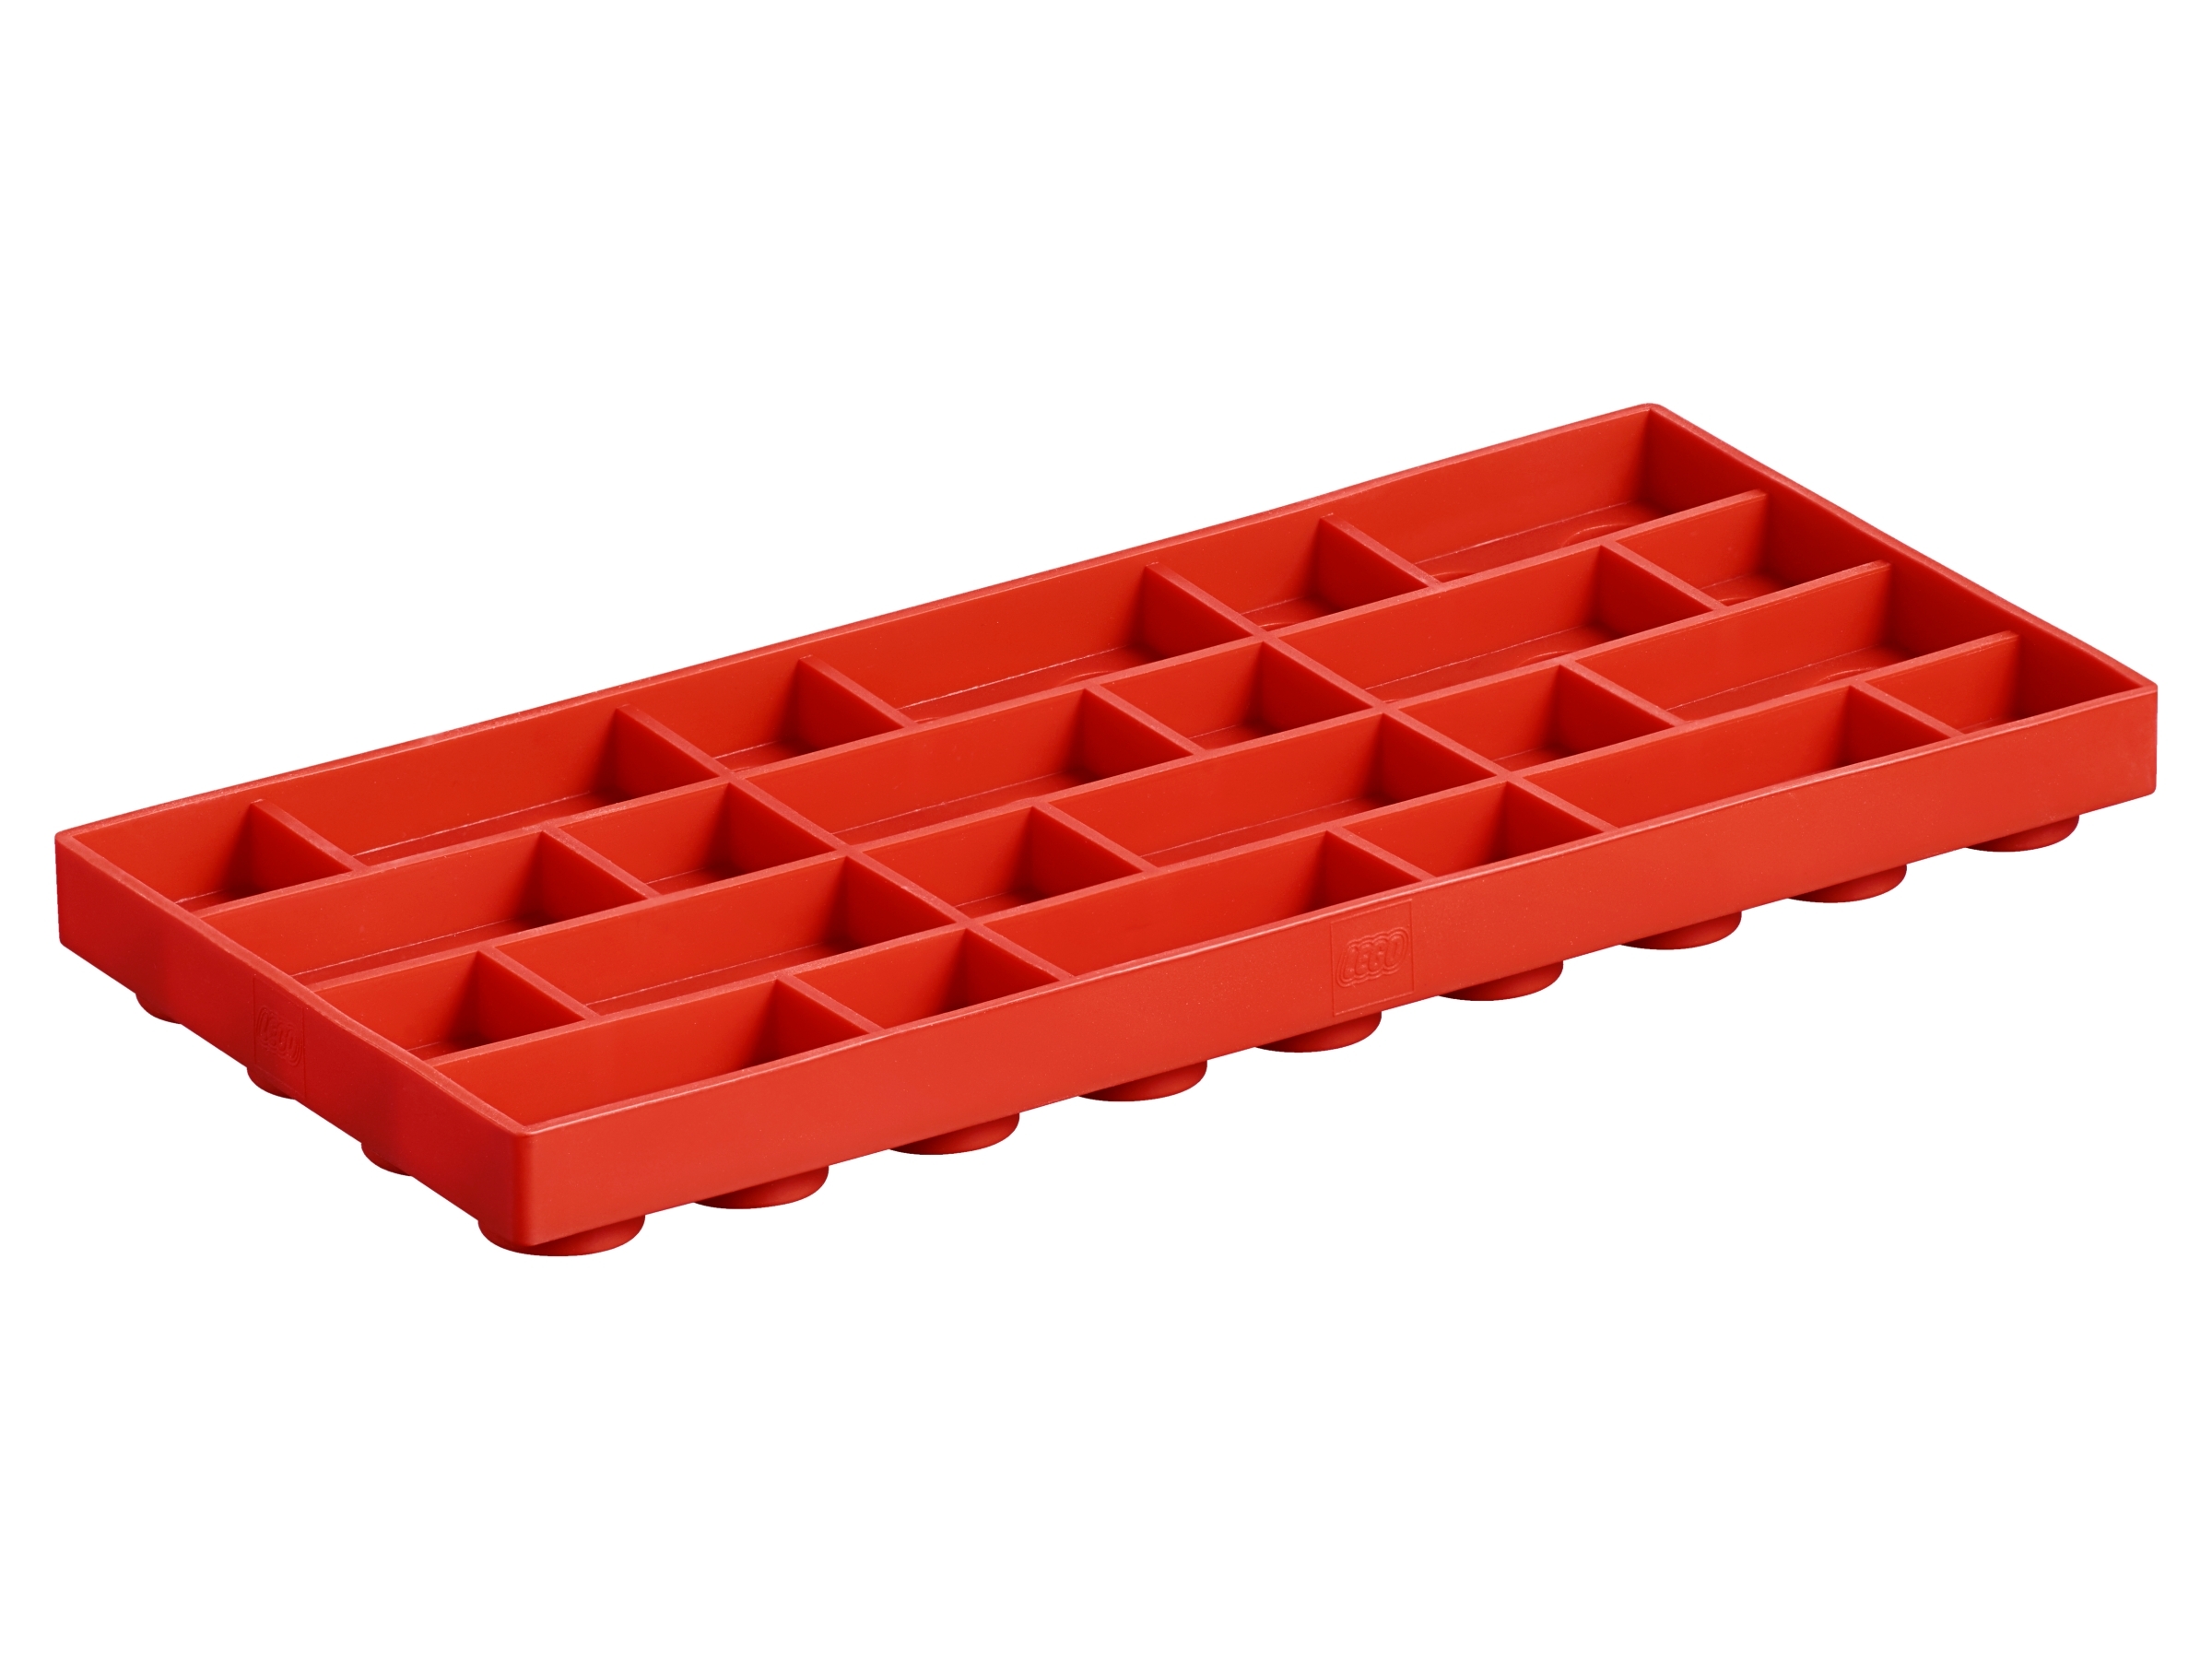 LEGO® Brick Ice Cube Tray 853911, Other